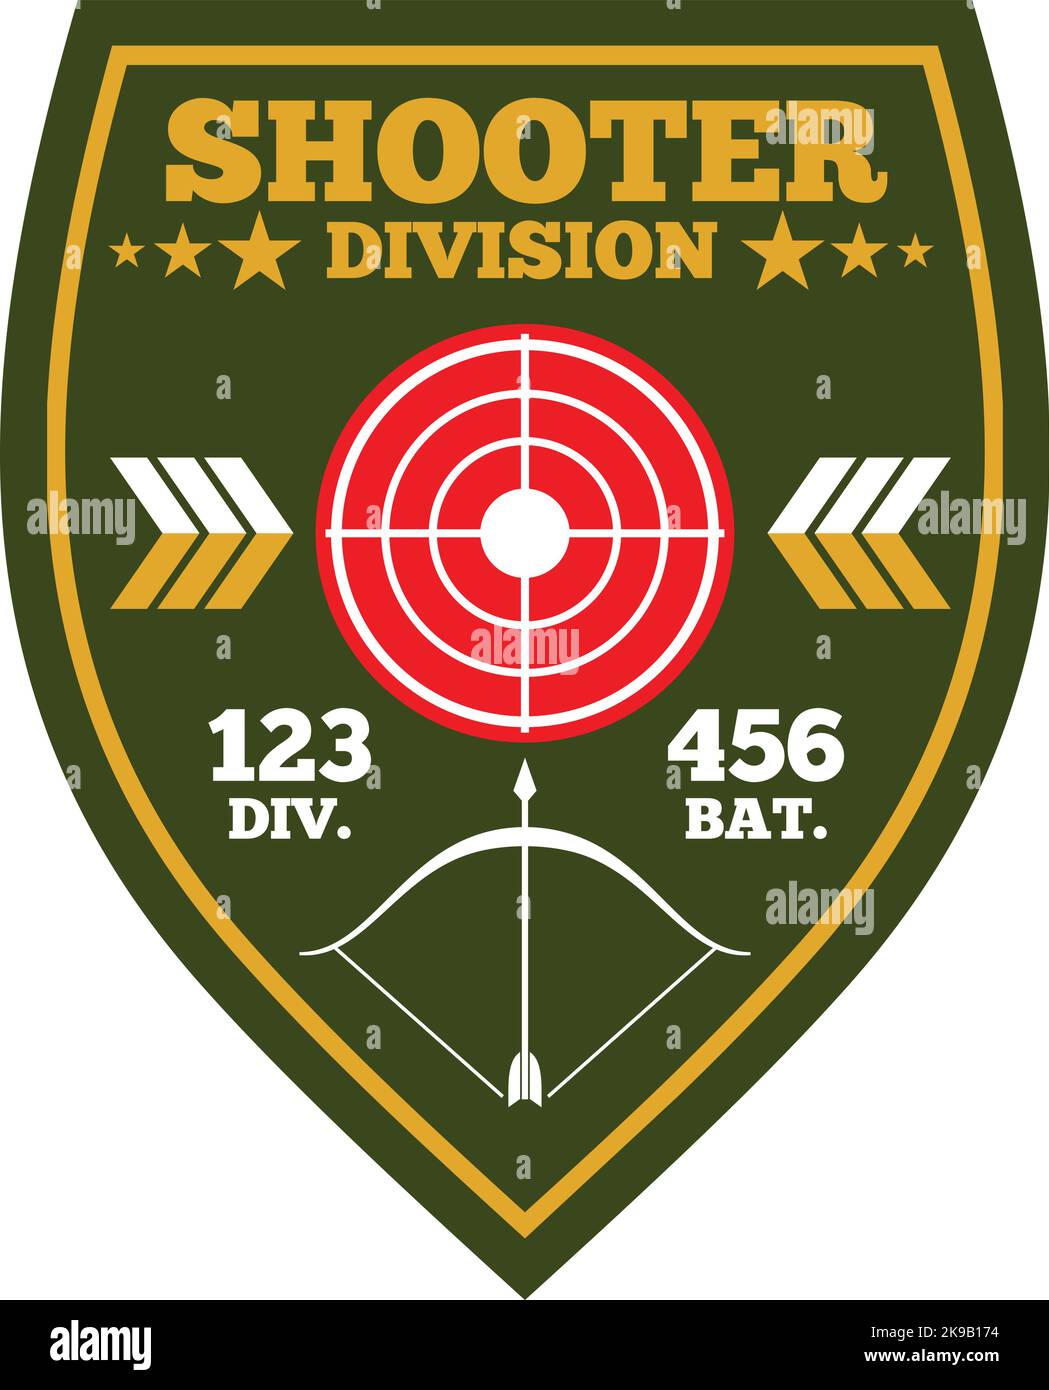 Shooter division logo. Shield shape arher camp emblem Stock Vector